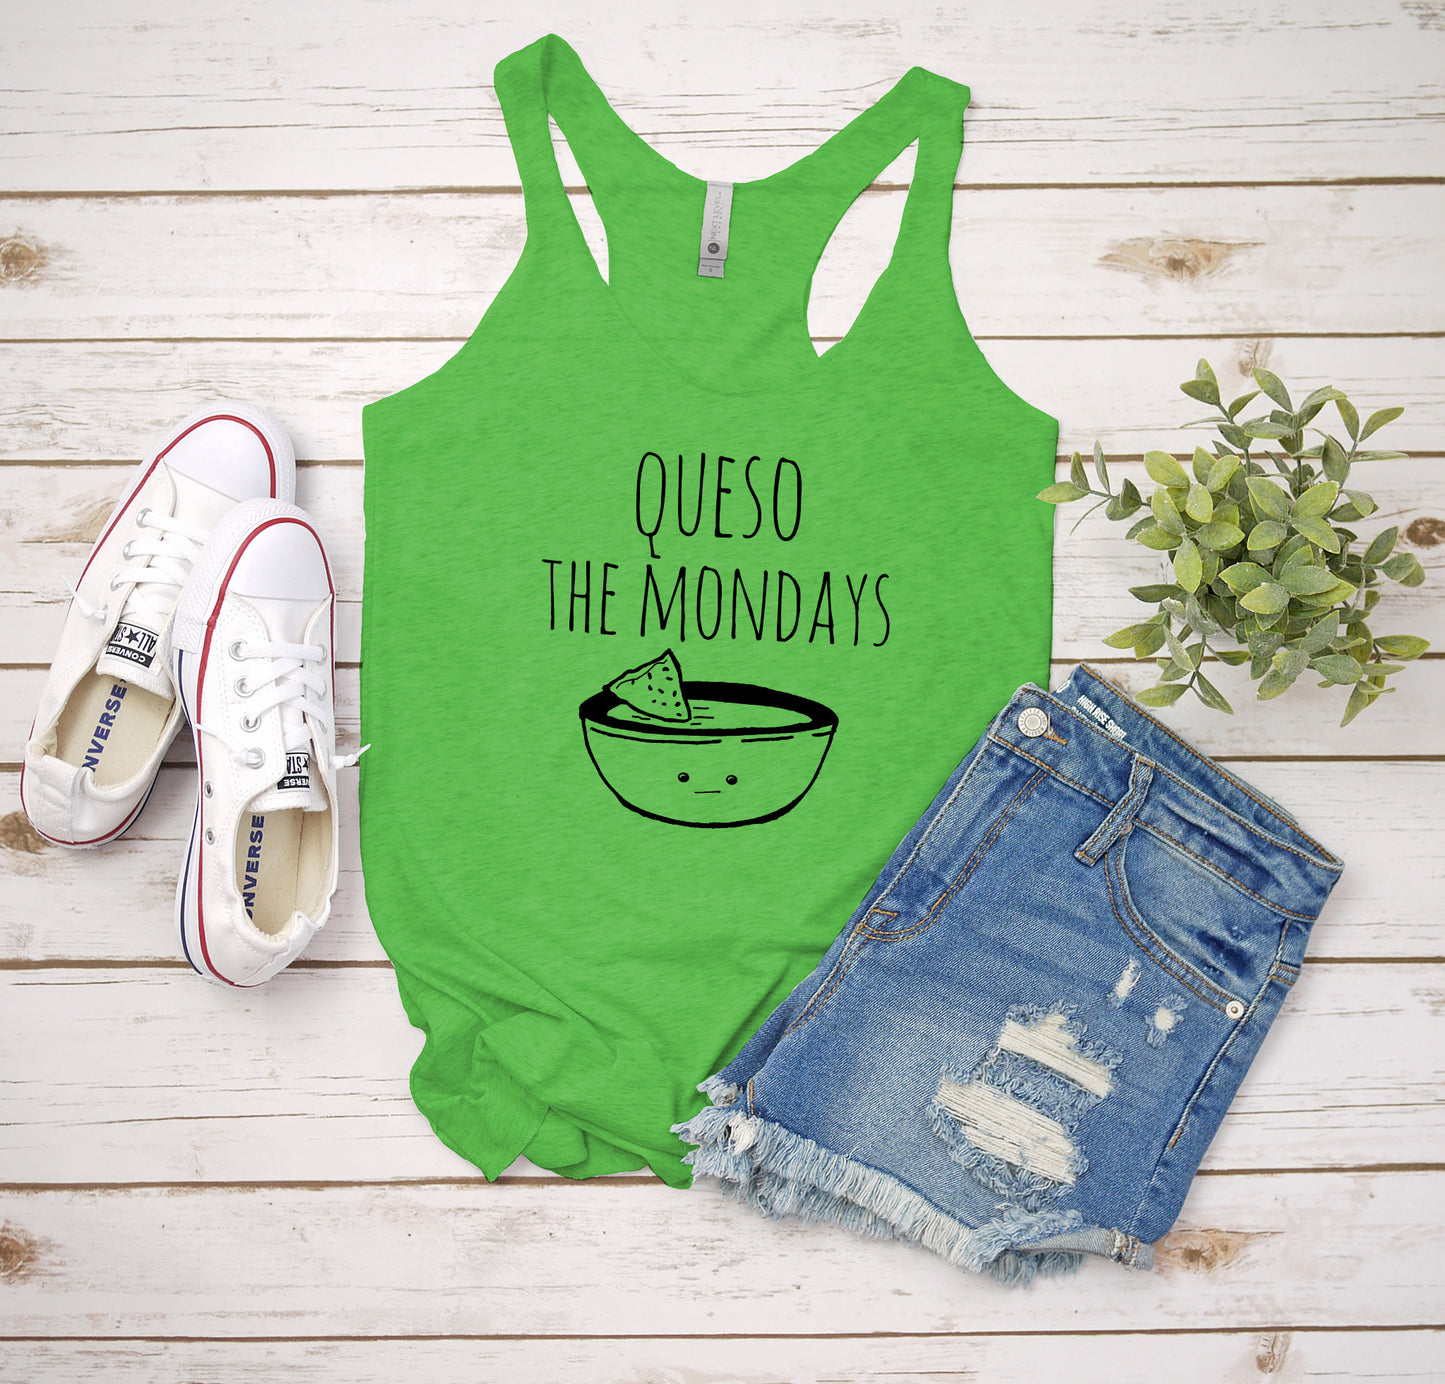 Queso The Mondays (Tacos) - Women's Tank - Heather Gray, Tahiti, or Envy